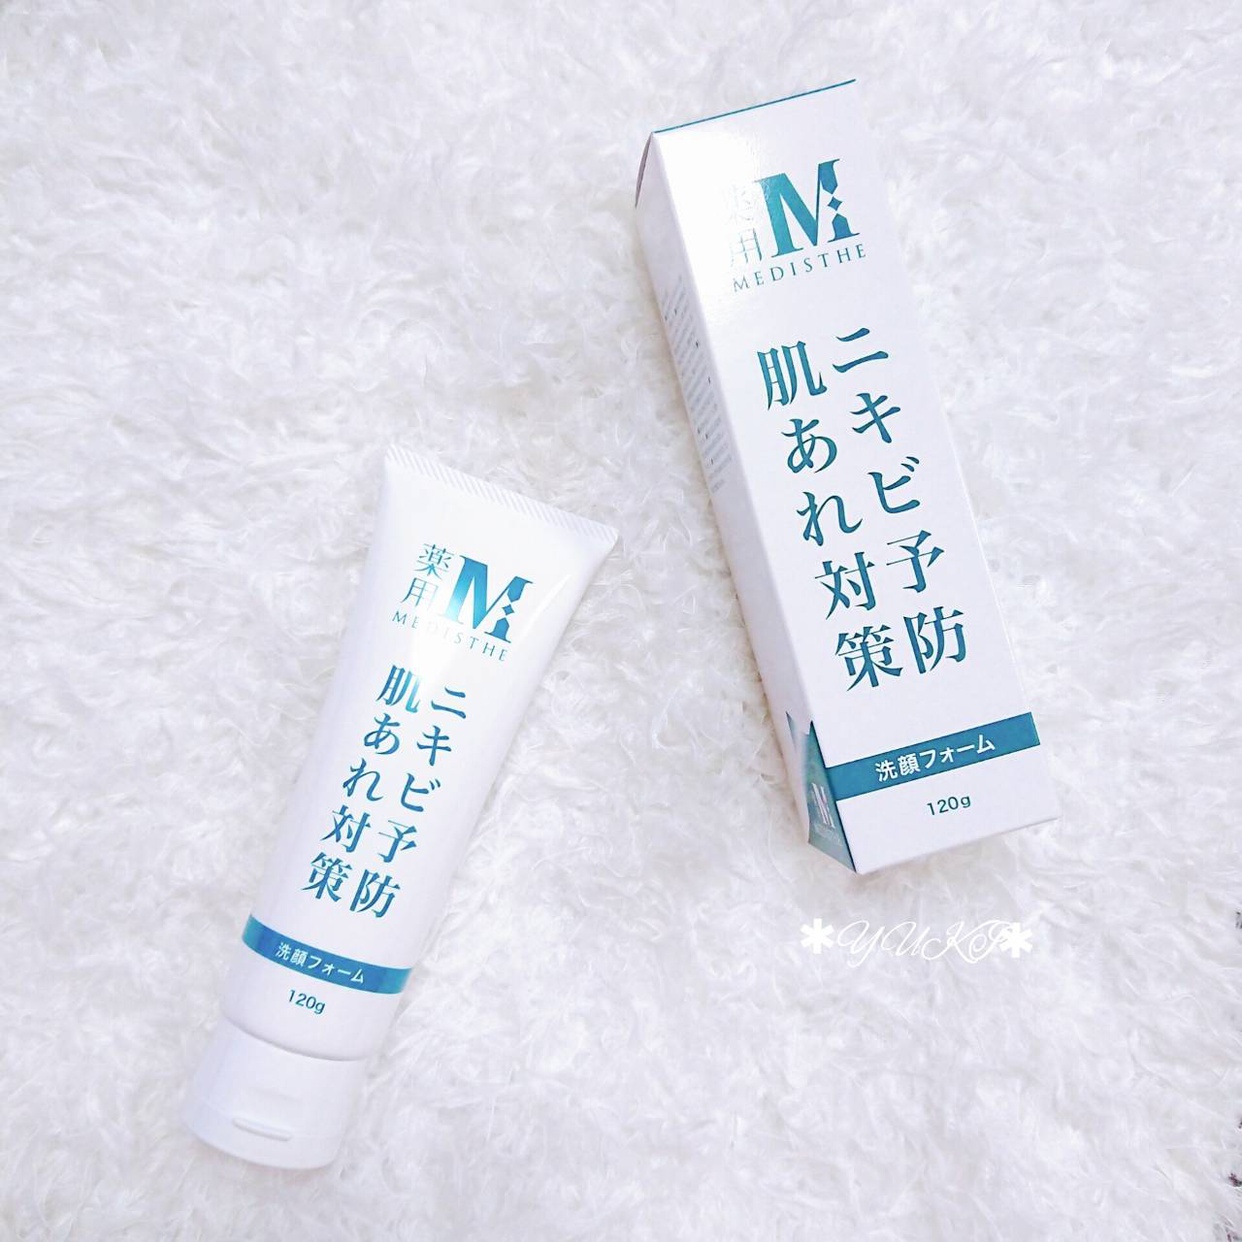 MEDISTHE(メディステ) 薬用 NI-KIBI 洗顔フォームを使ったYUKIさんのクチコミ画像1